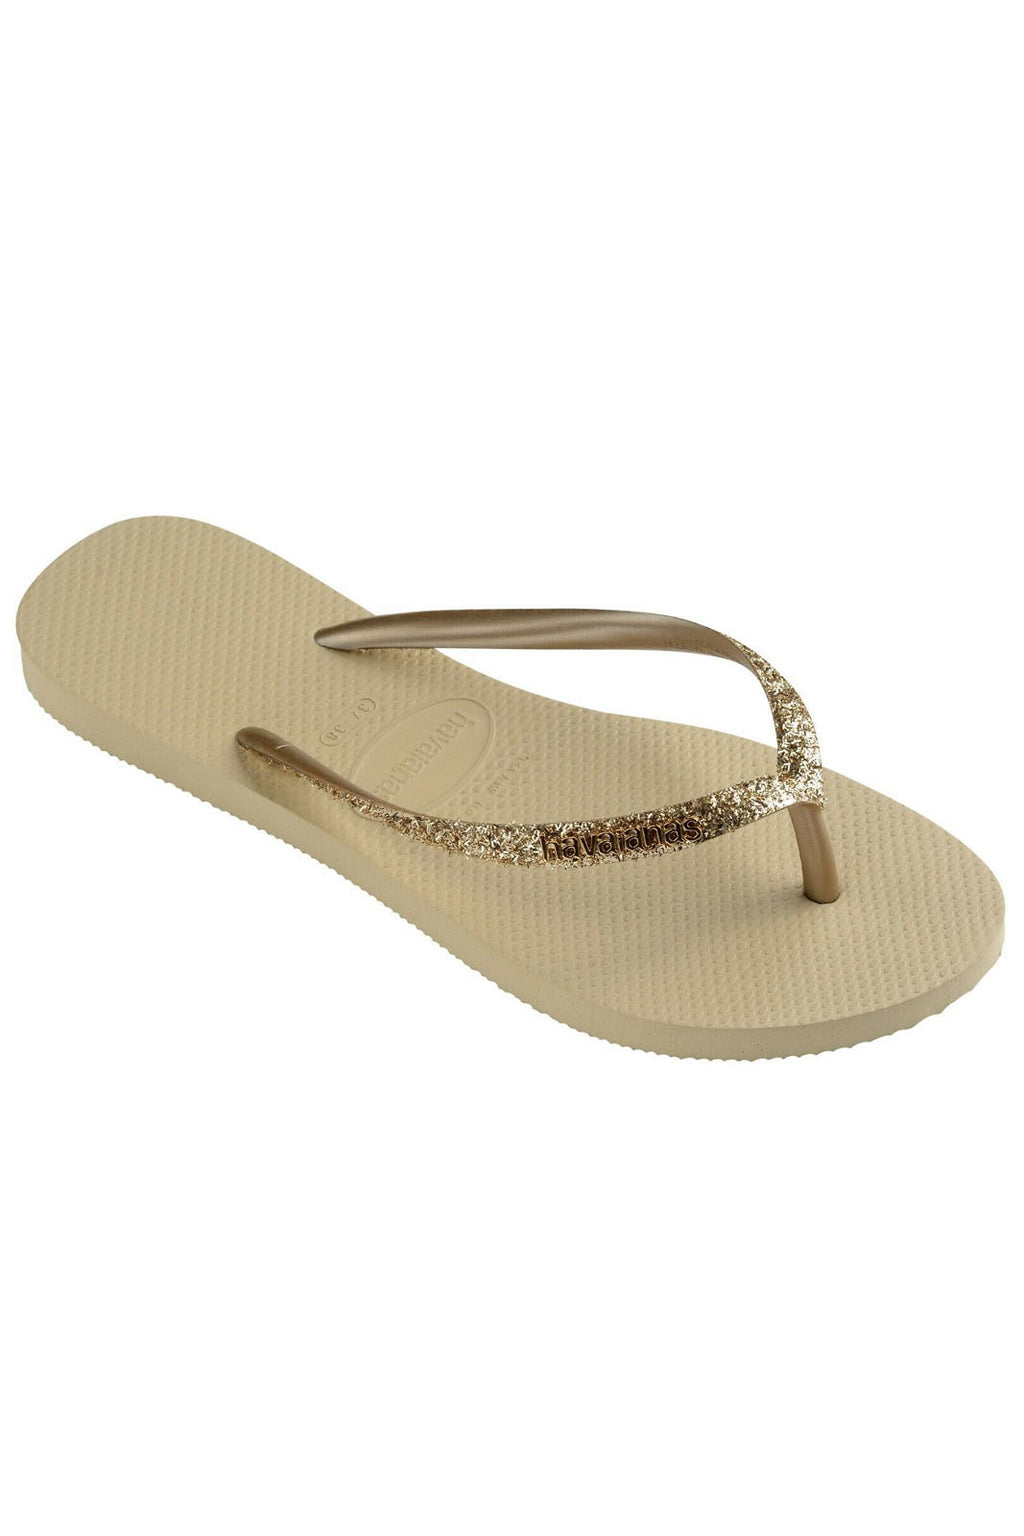 Havaianas Slim Glitter II Flip Flops - Sand Grey